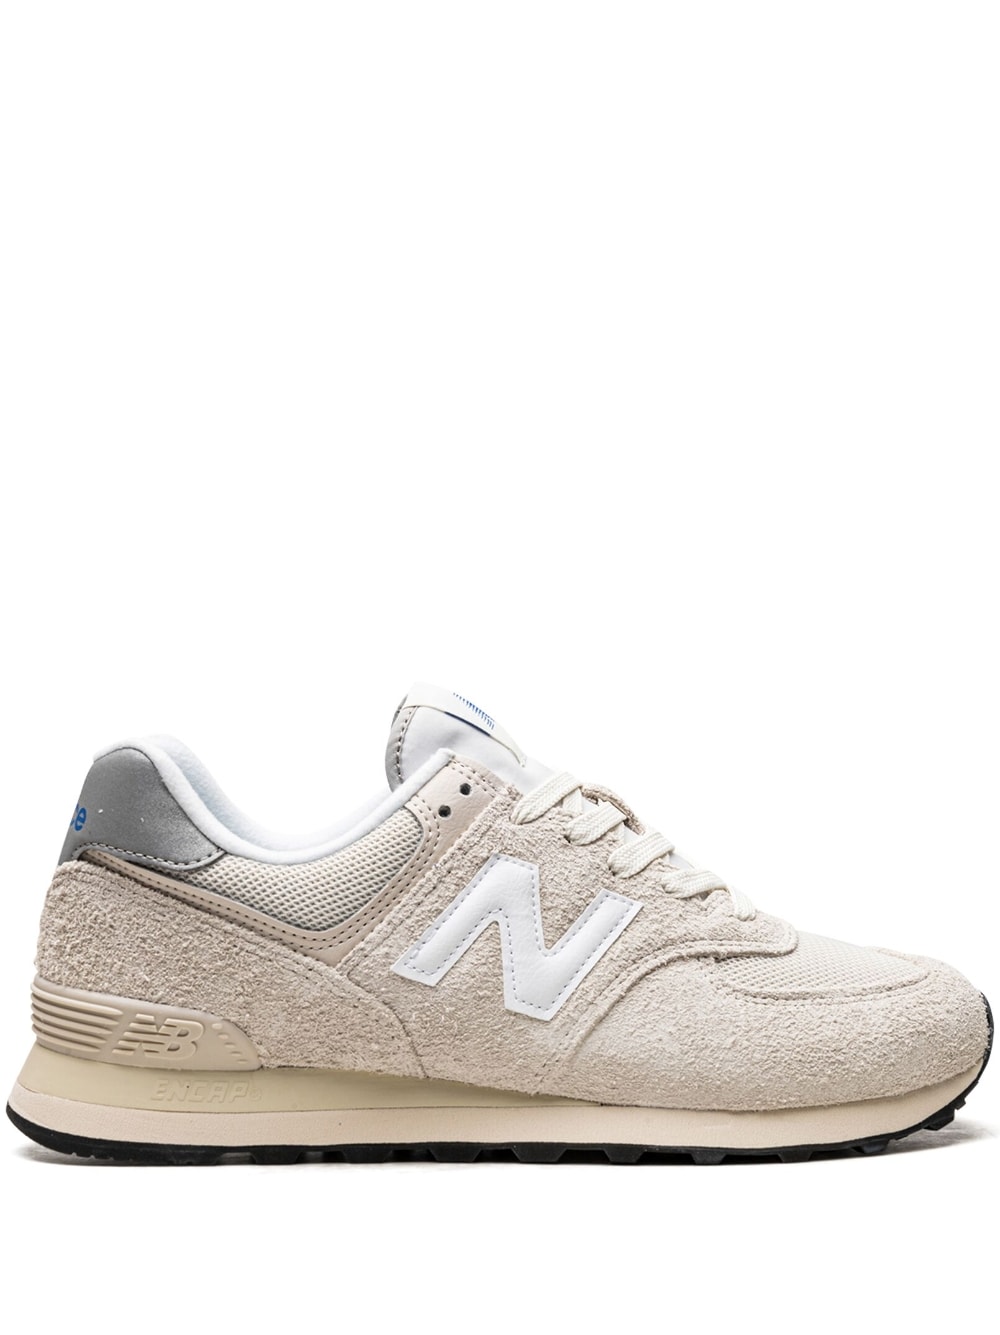 New Balance 574 "Cream" low-top sneakers - Neutrals